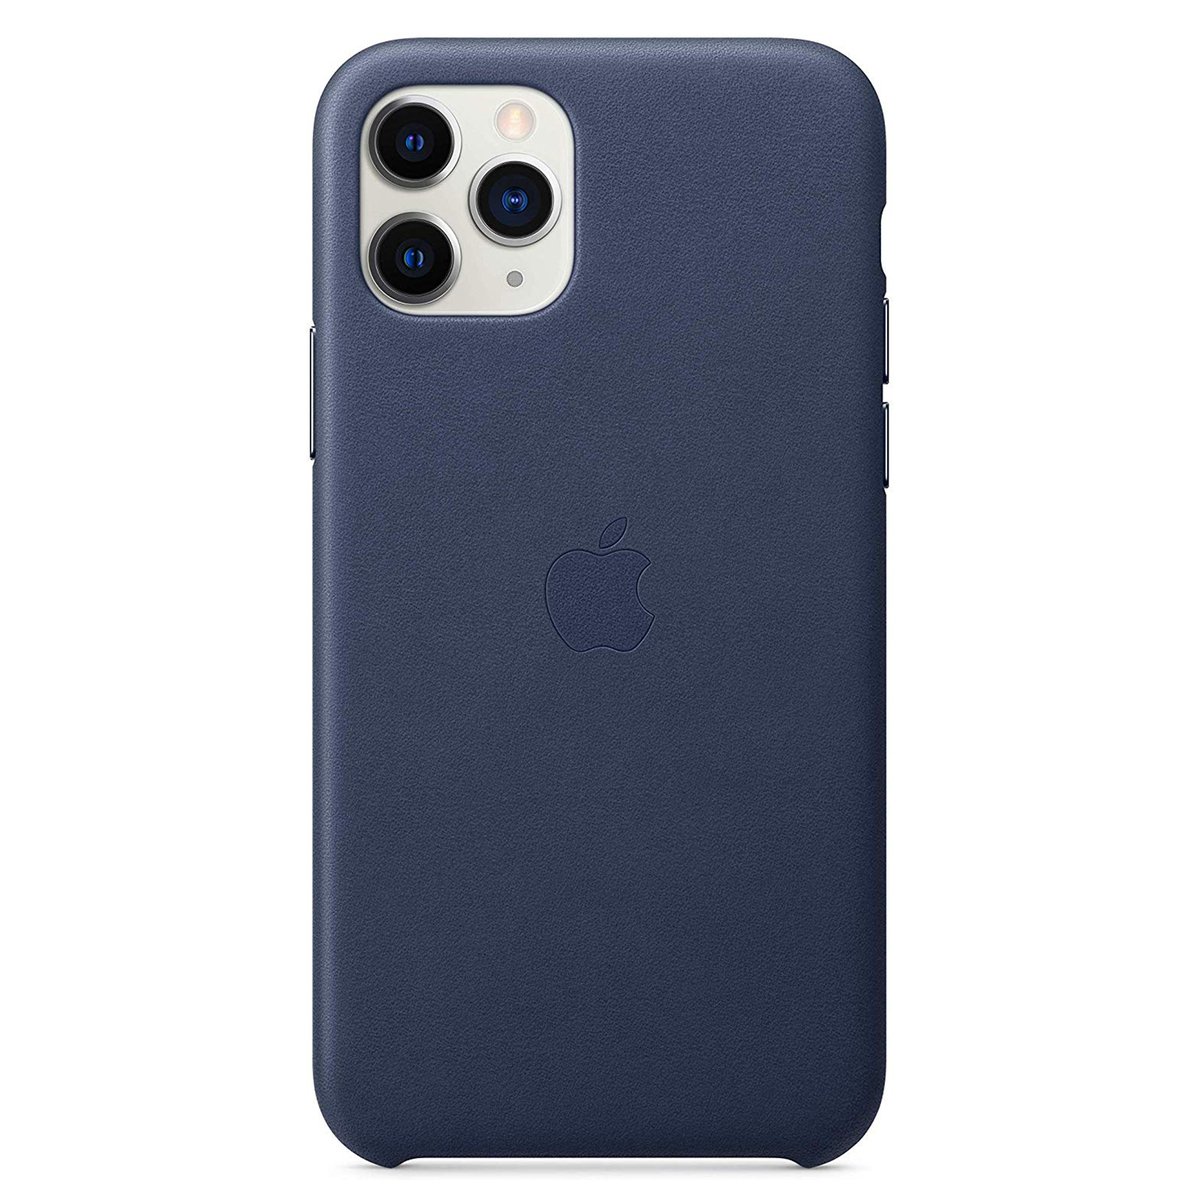 iPhone 11 Pro Leather Case MWYG2ZM Midnight Blue